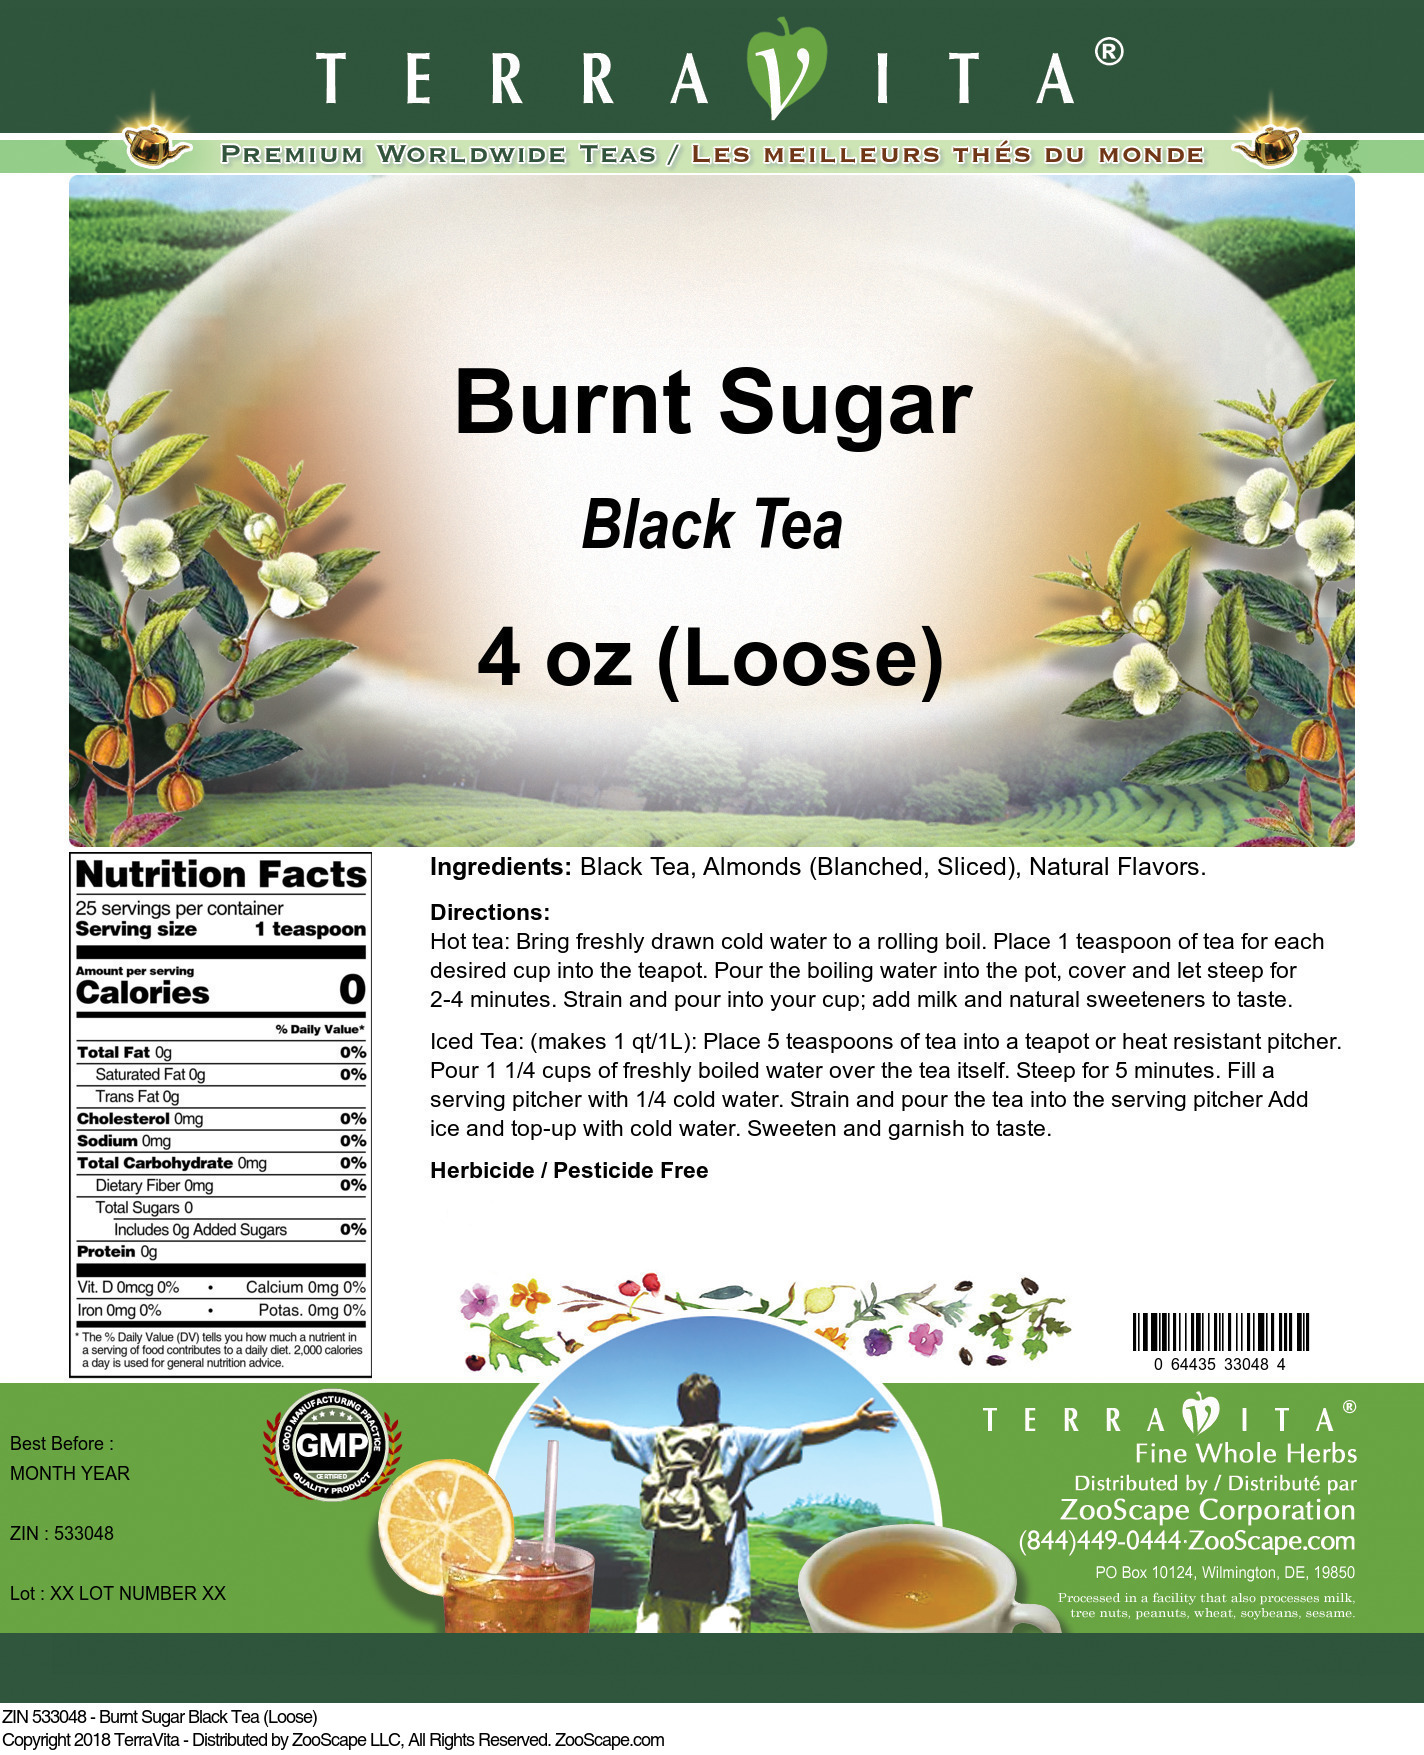 Burnt Sugar Black Tea (Loose) - Label